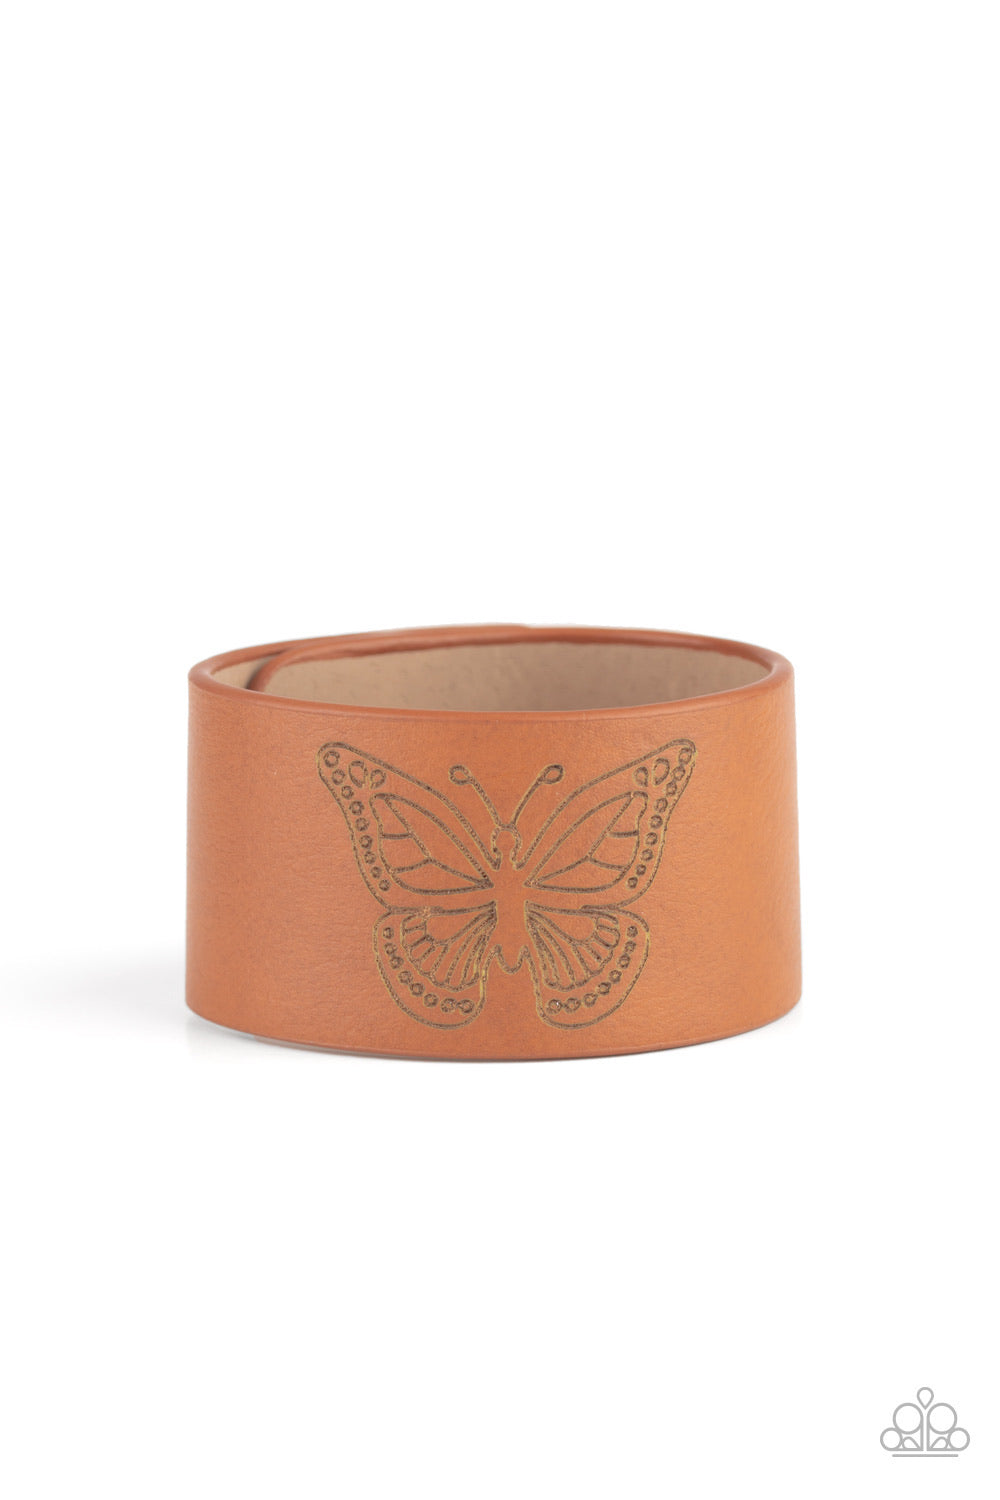 Flirty Flutter - Brown Leather Bracelet - Paparazzi Accessories